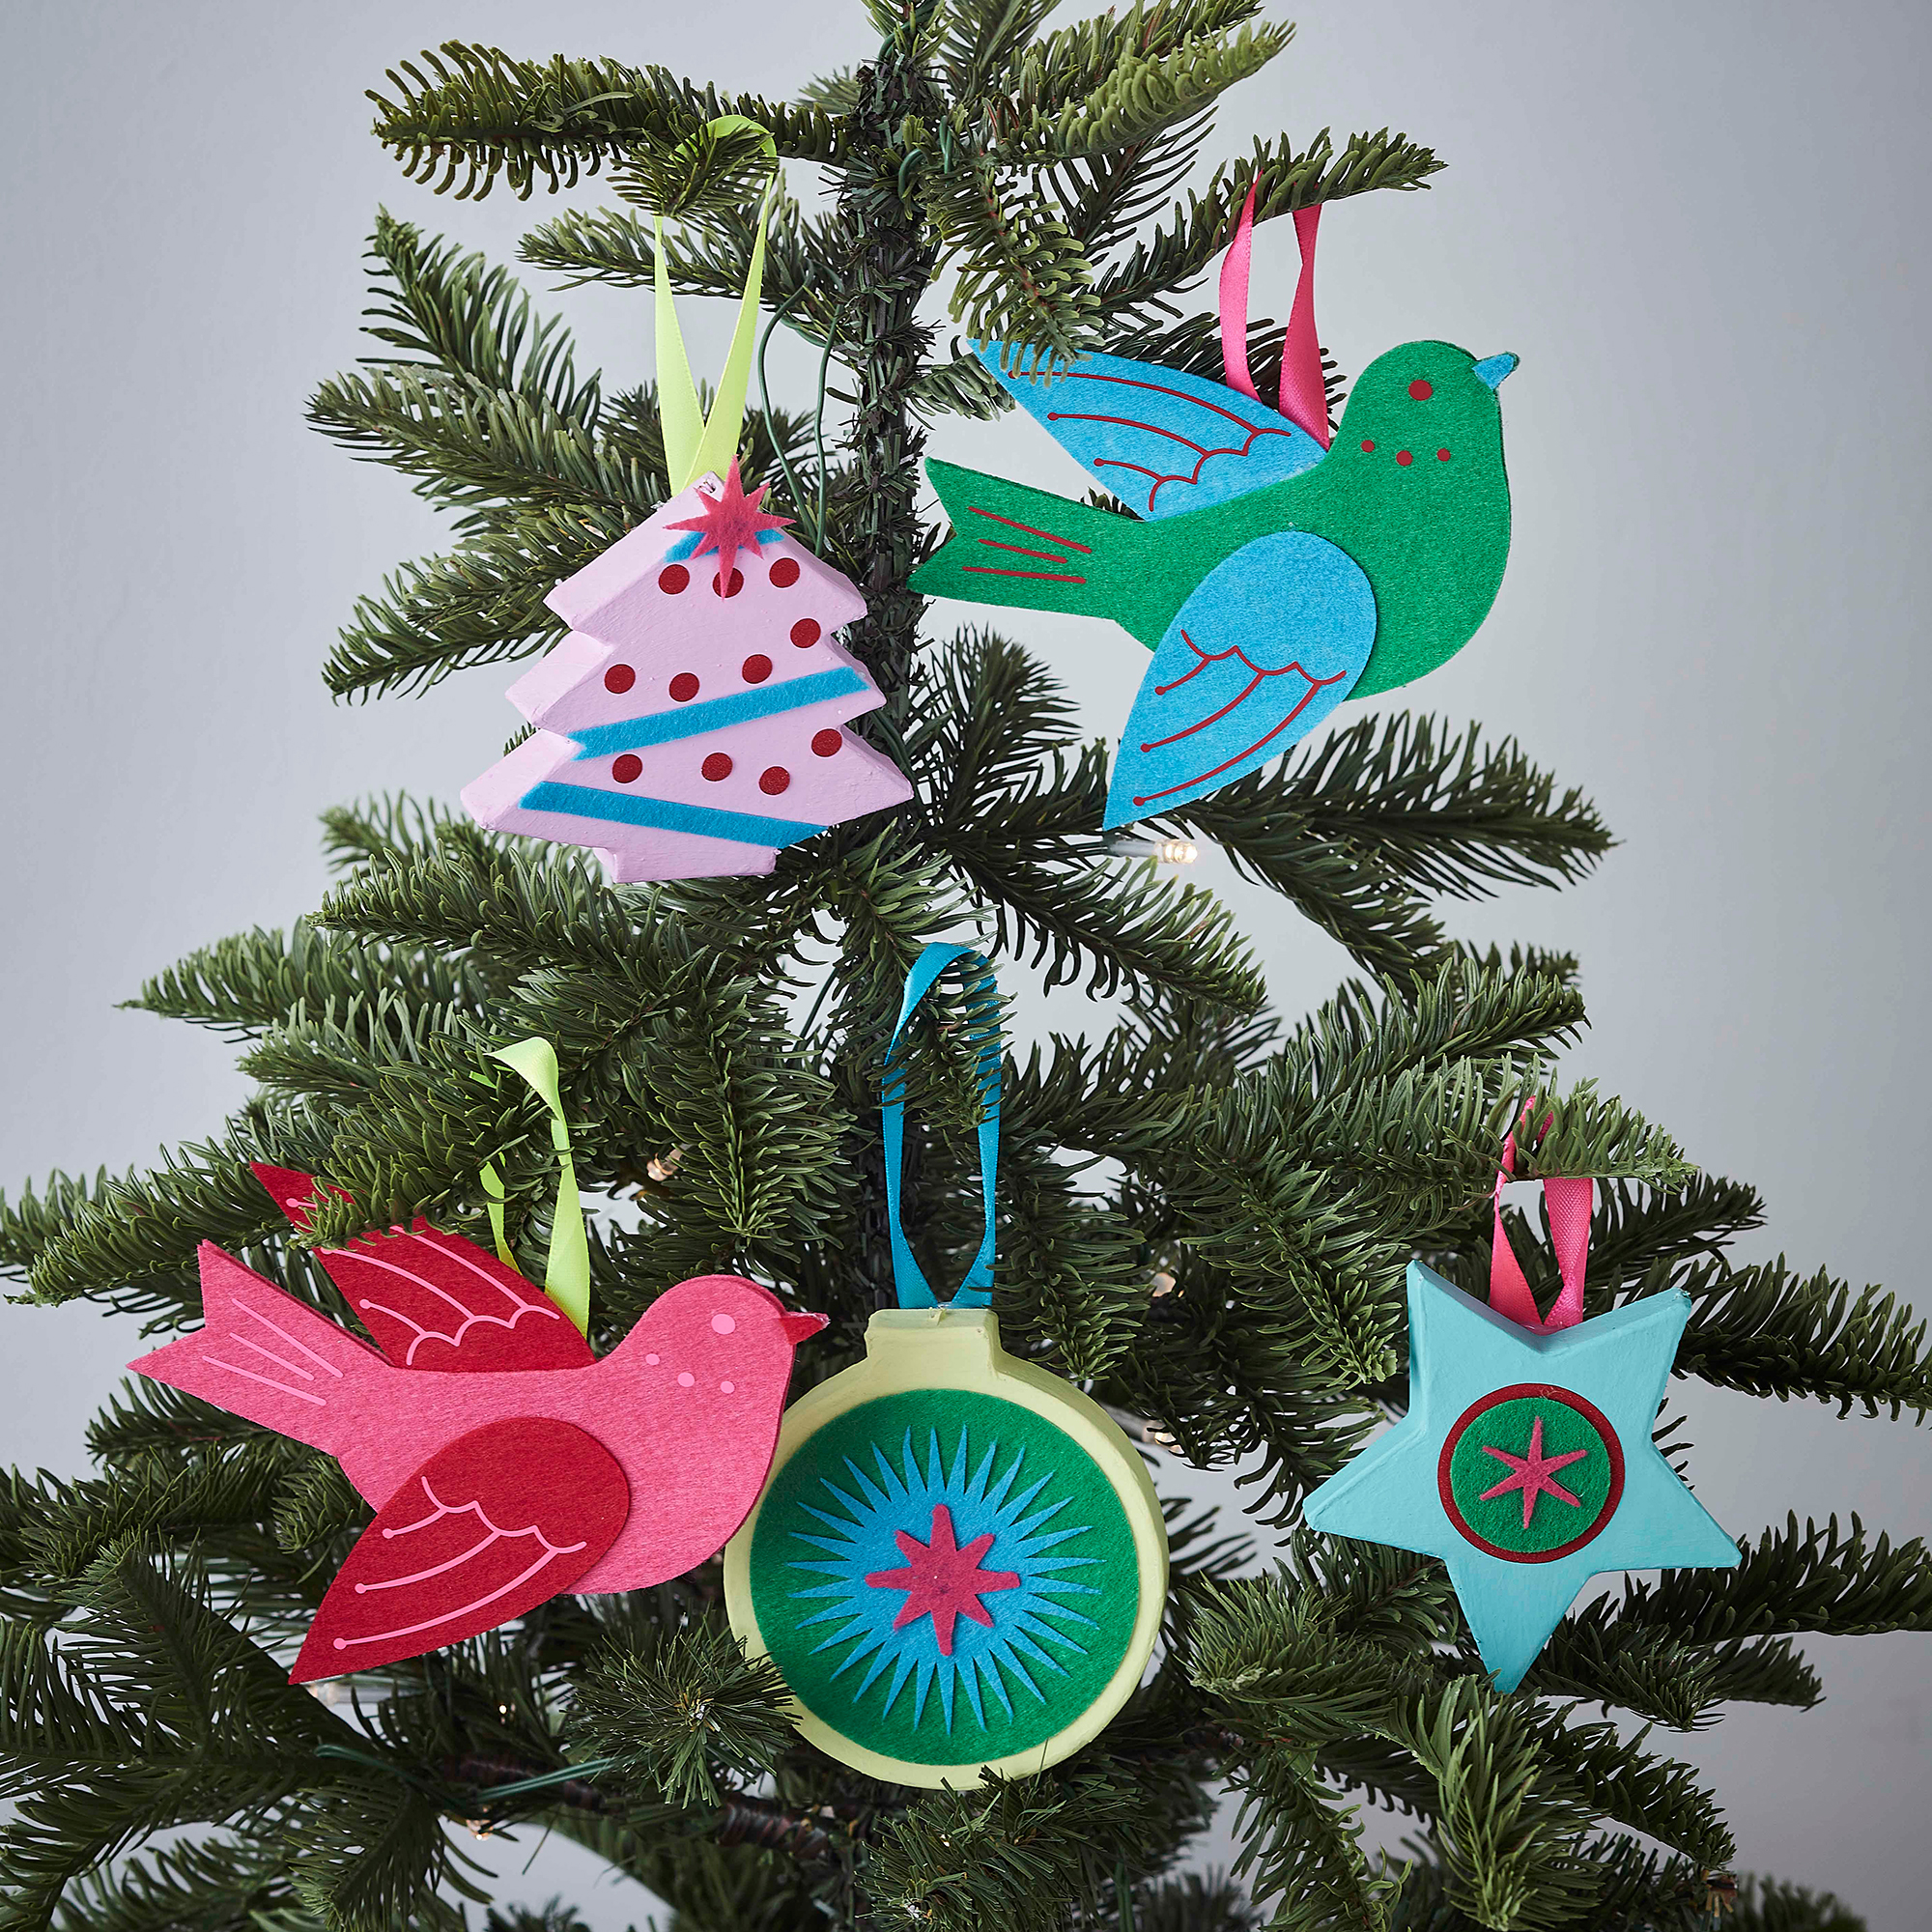 Cricut: How to Make Felt Christmas Decorations | Hobbycraft